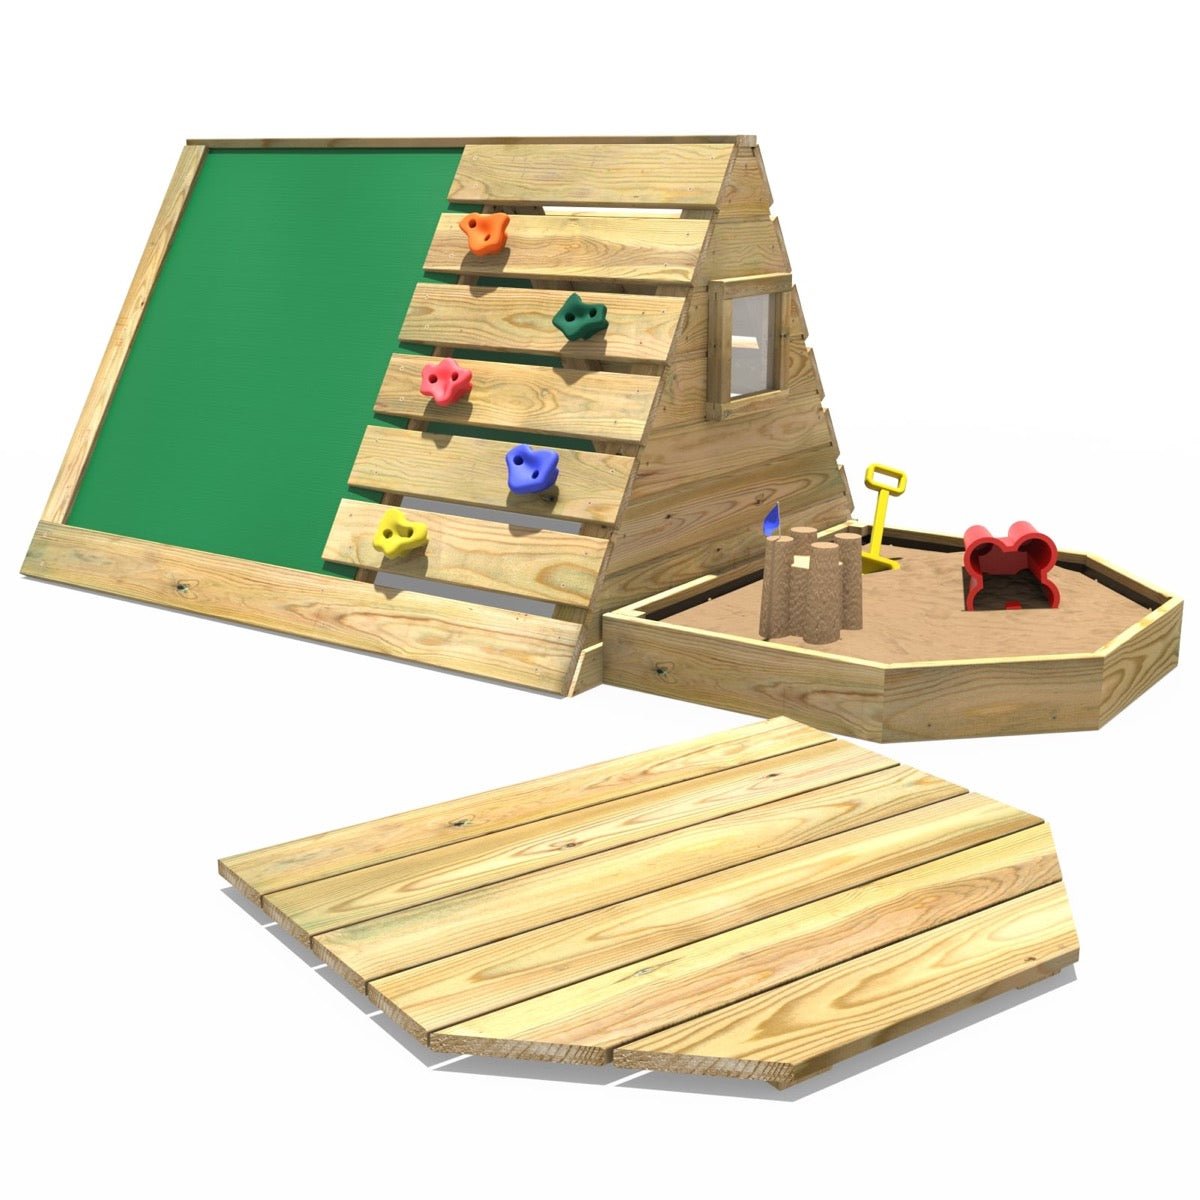 Rebo Mini Wooden Climbing Pyramid Adventure Playset + Sandpit & Den - Green